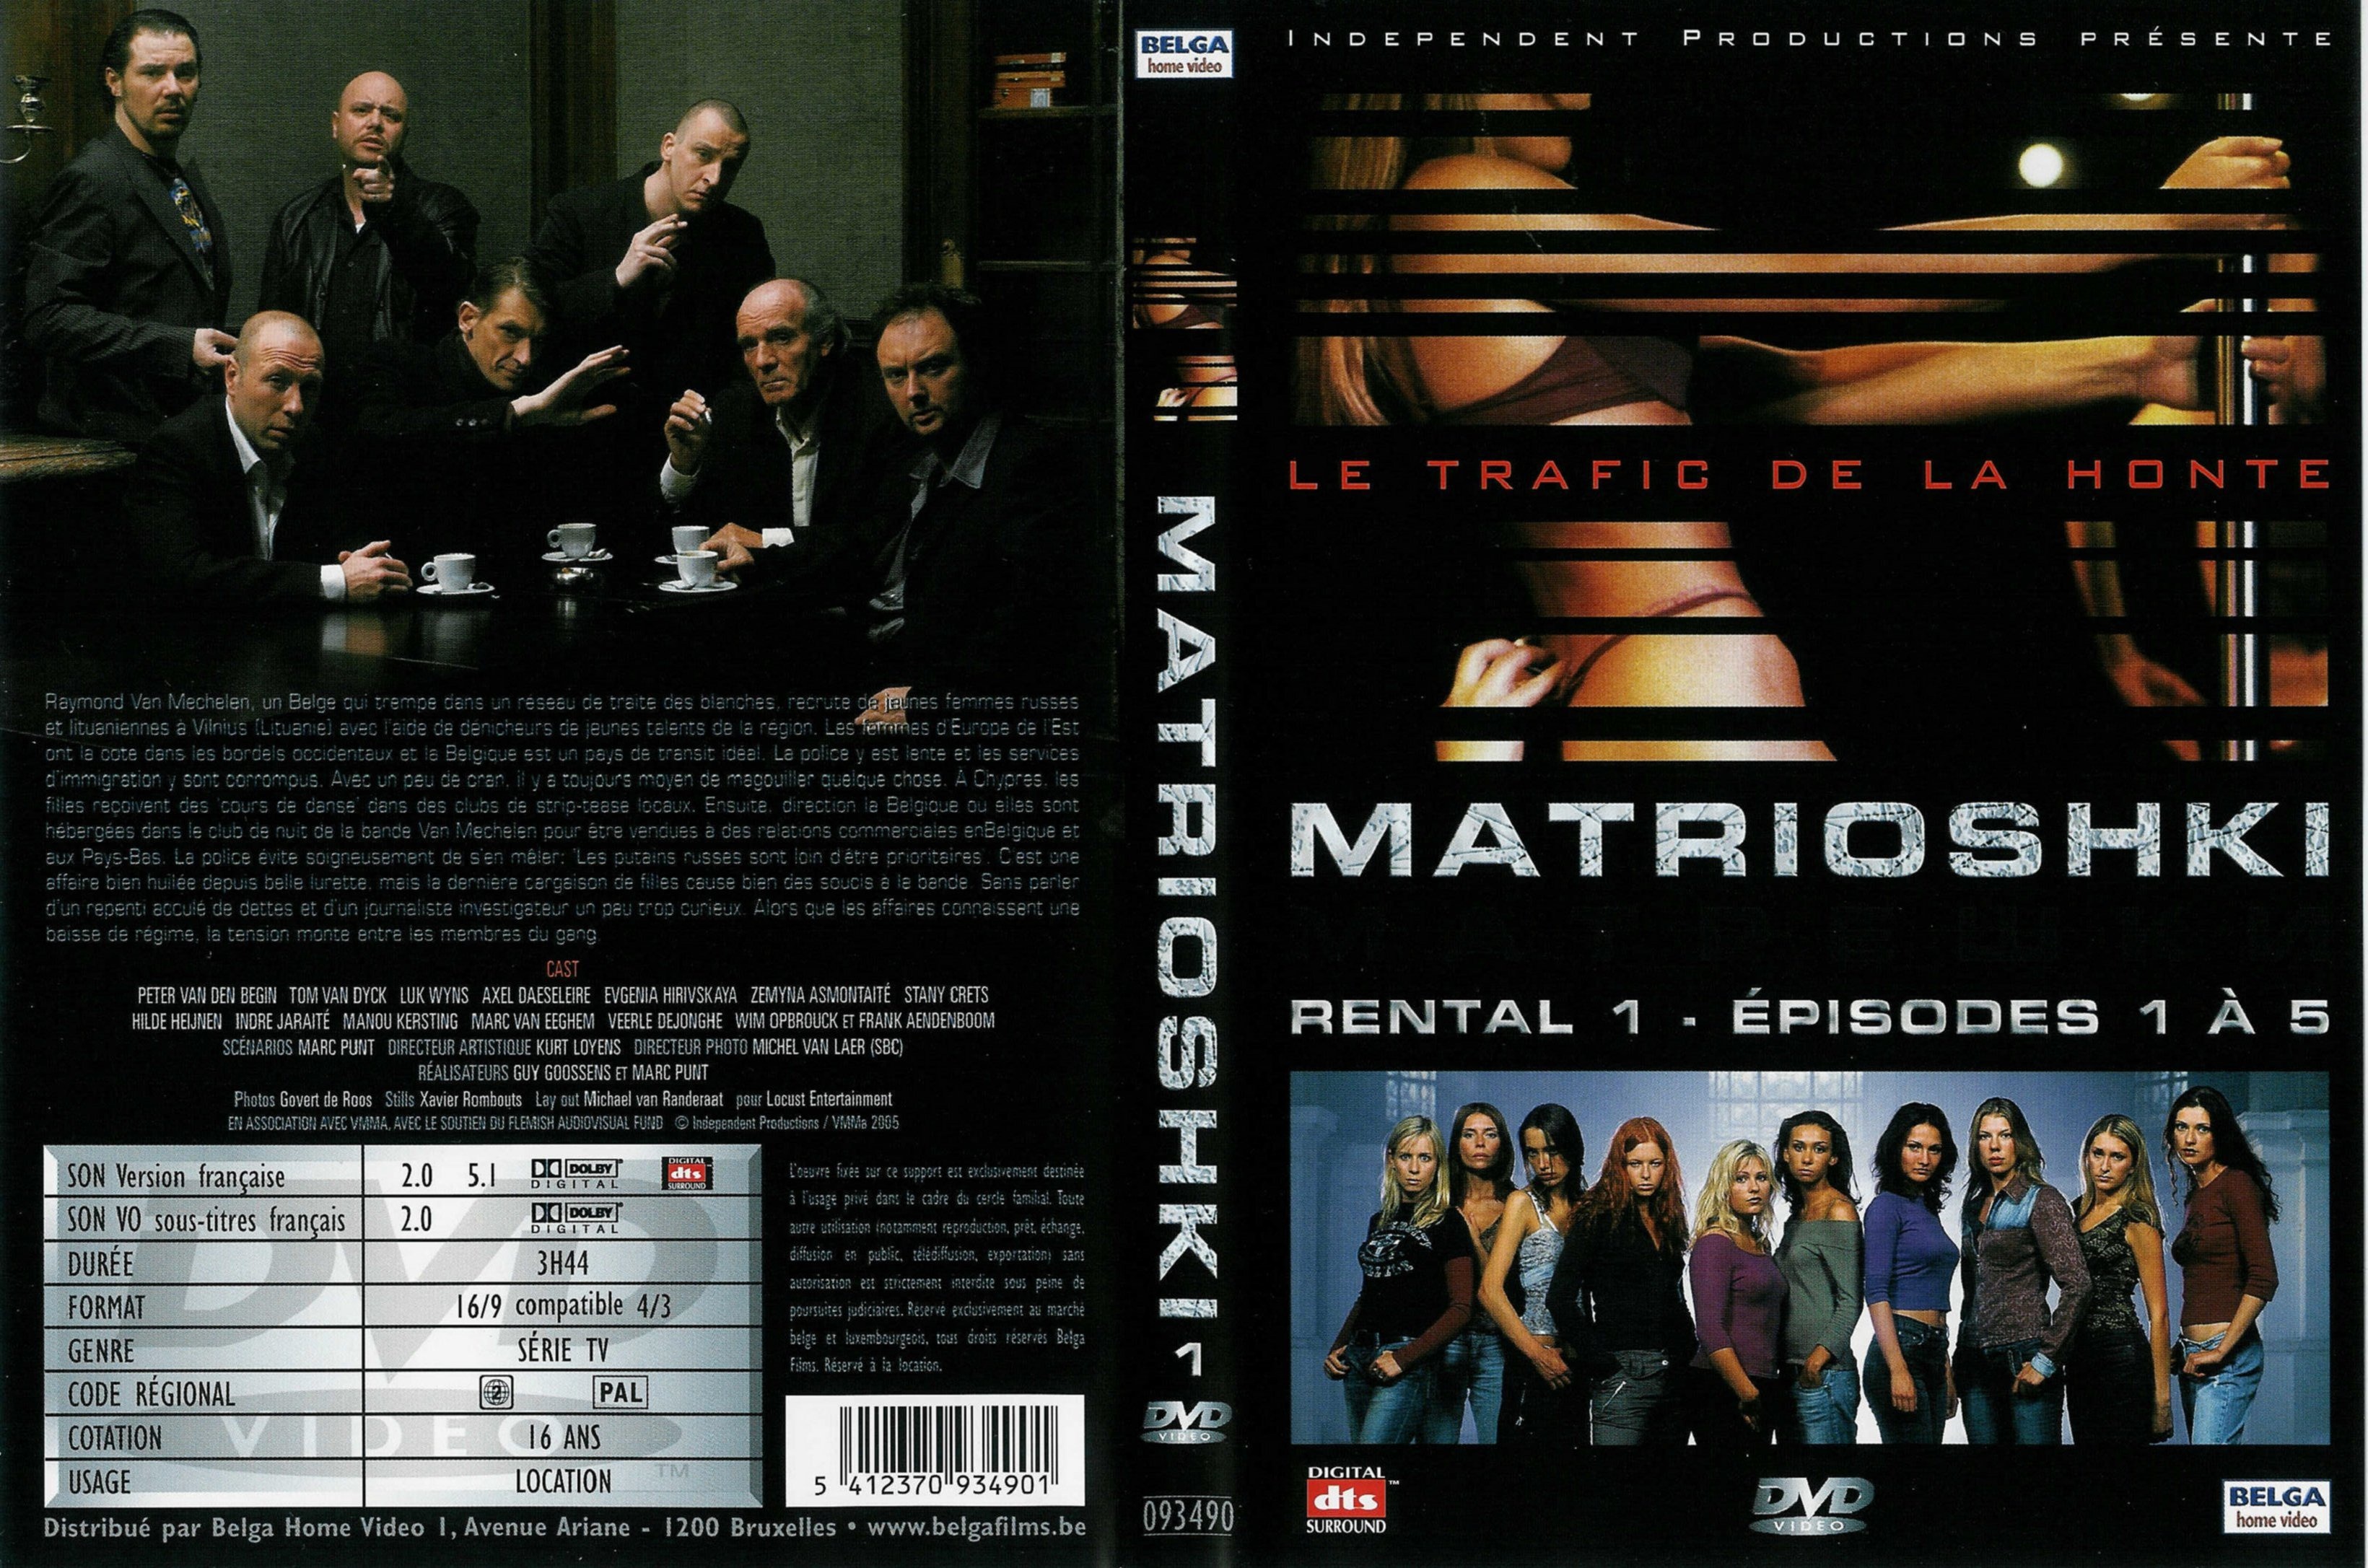 Jaquette DVD Matrioshki DVD 1